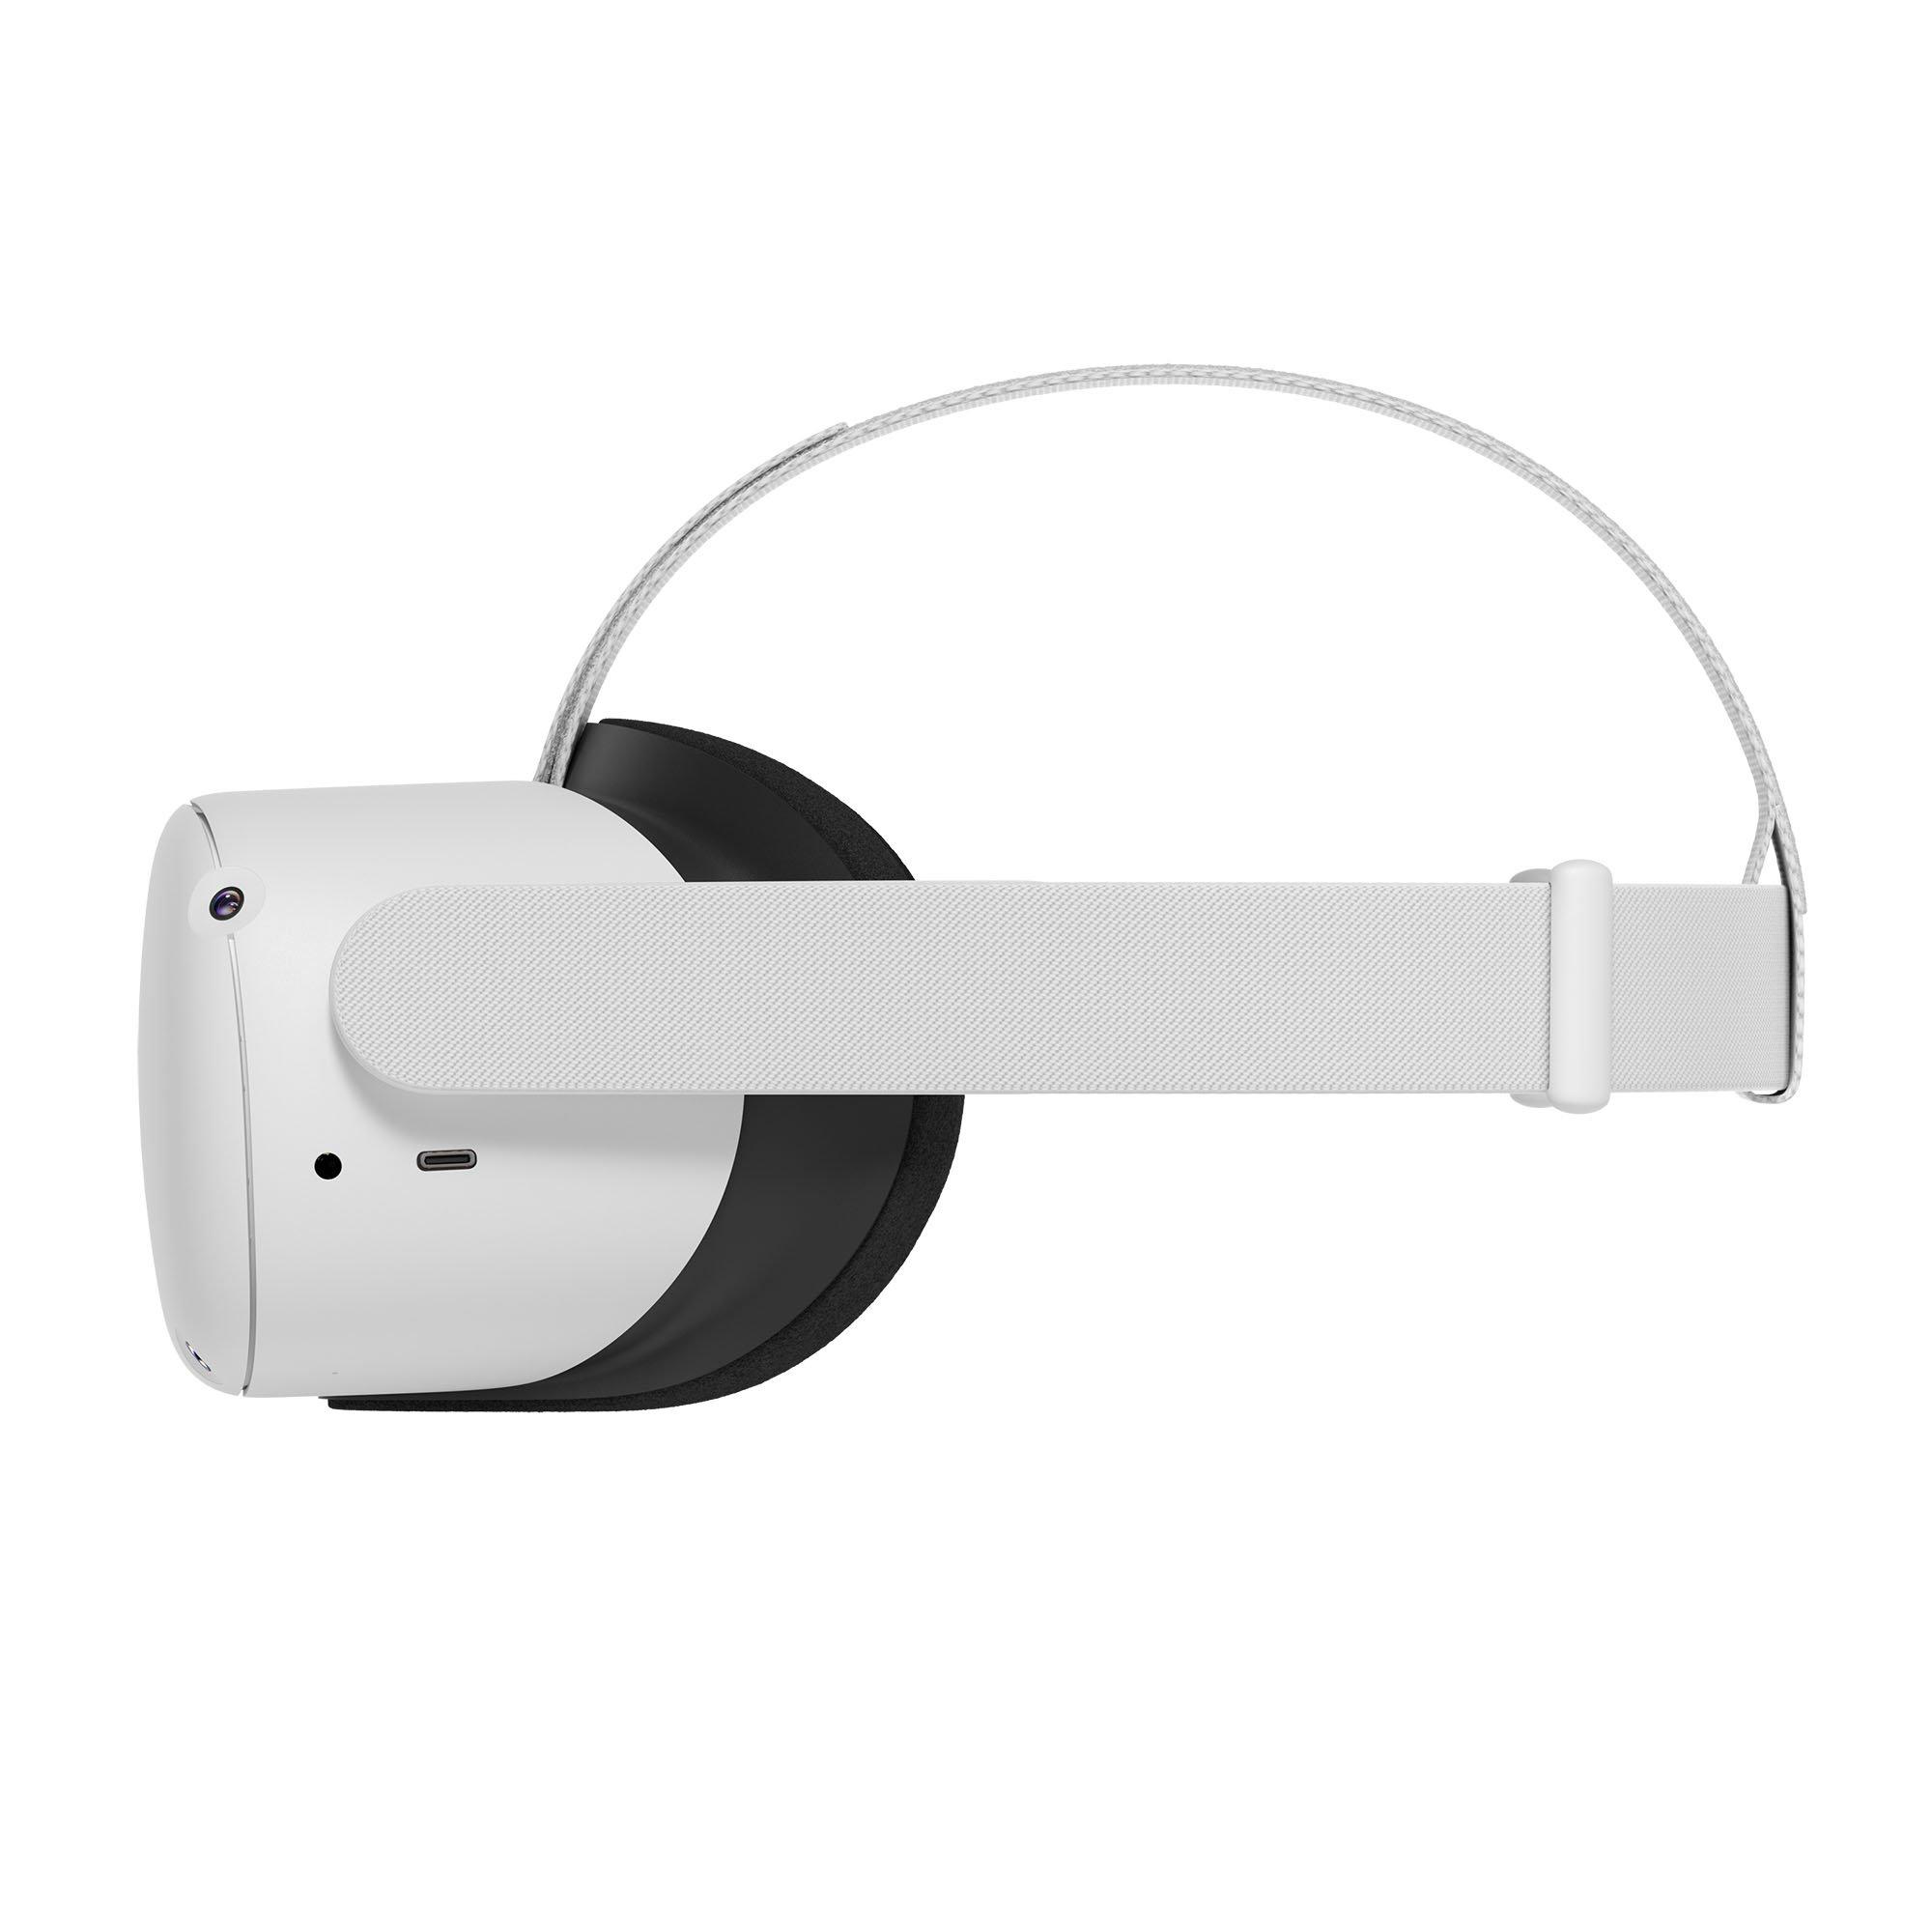 Meta Quest 2 - Virtual Reality Headset - 128GB GameStop